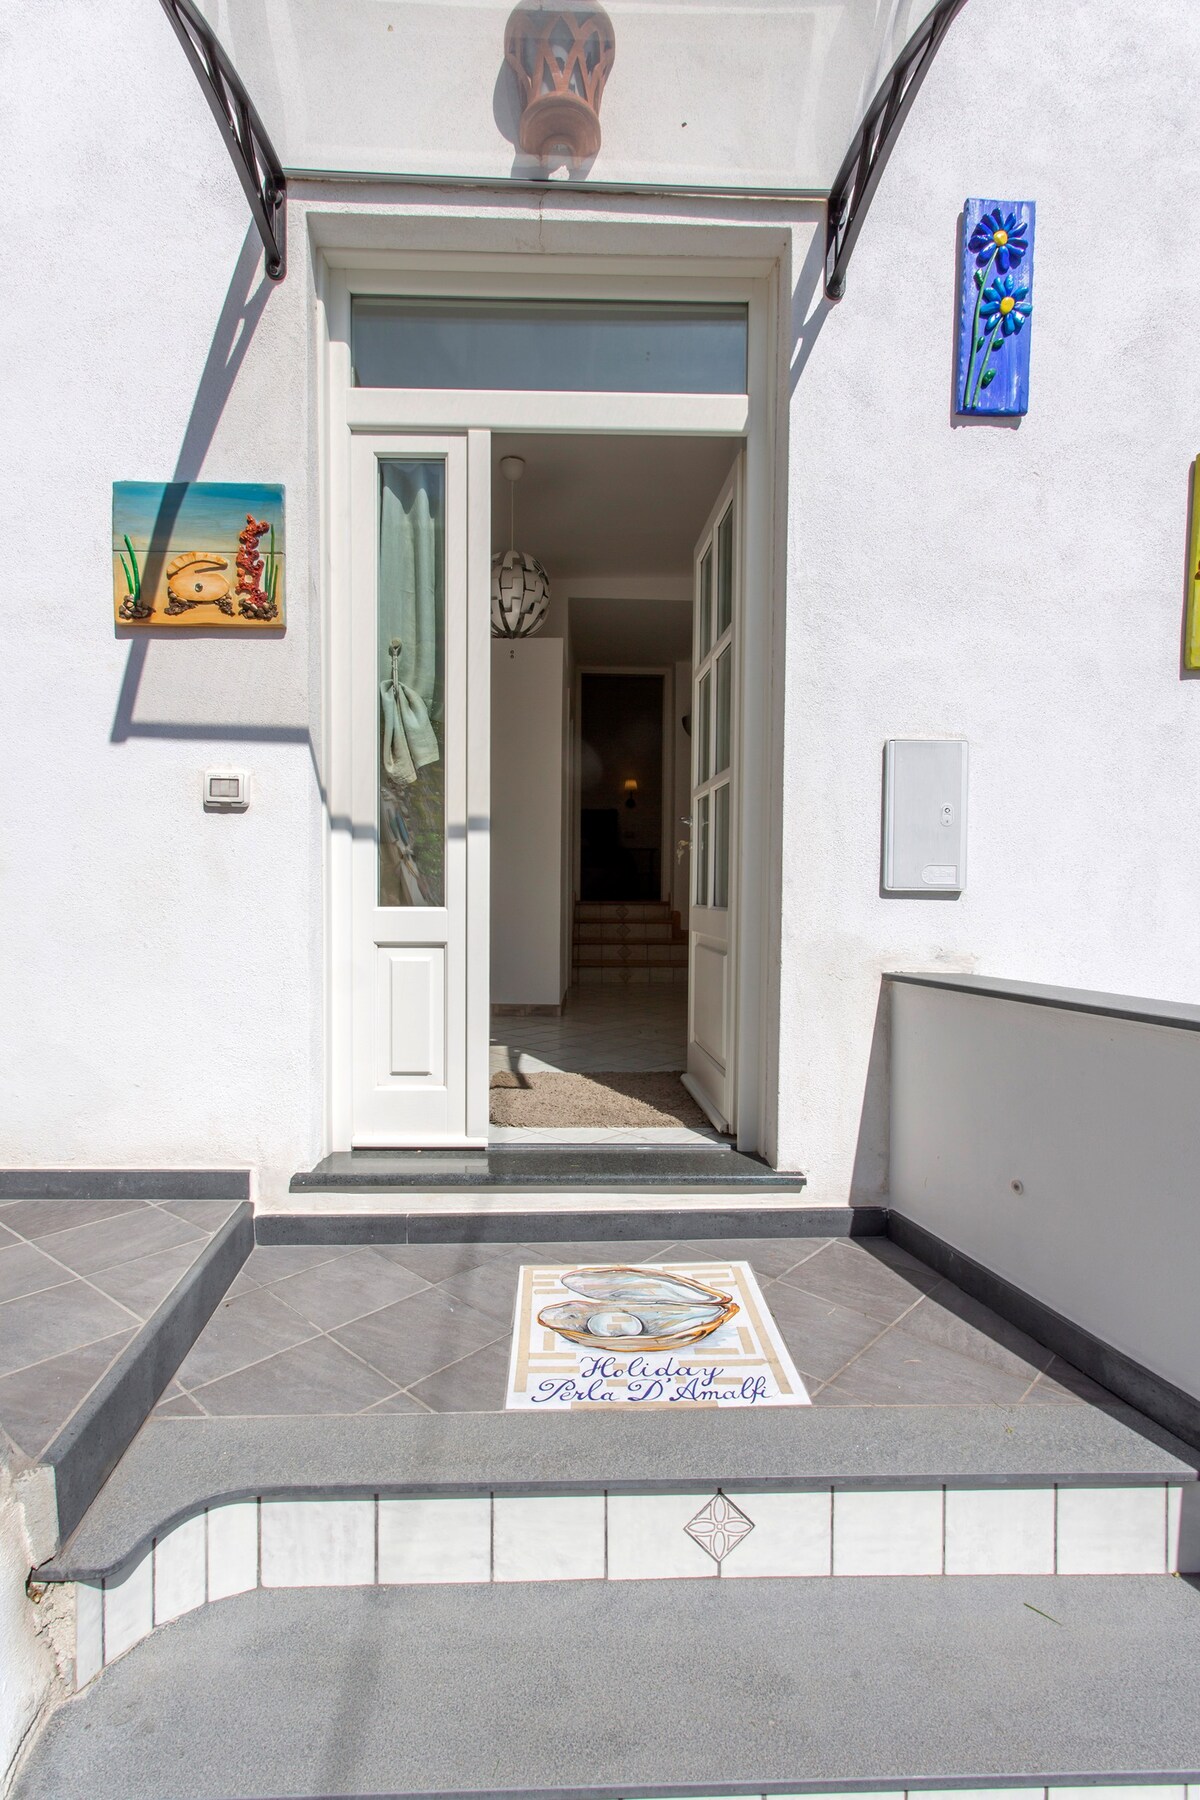 「Perla d 'Amalfi」度假免费日光浴室和停车场